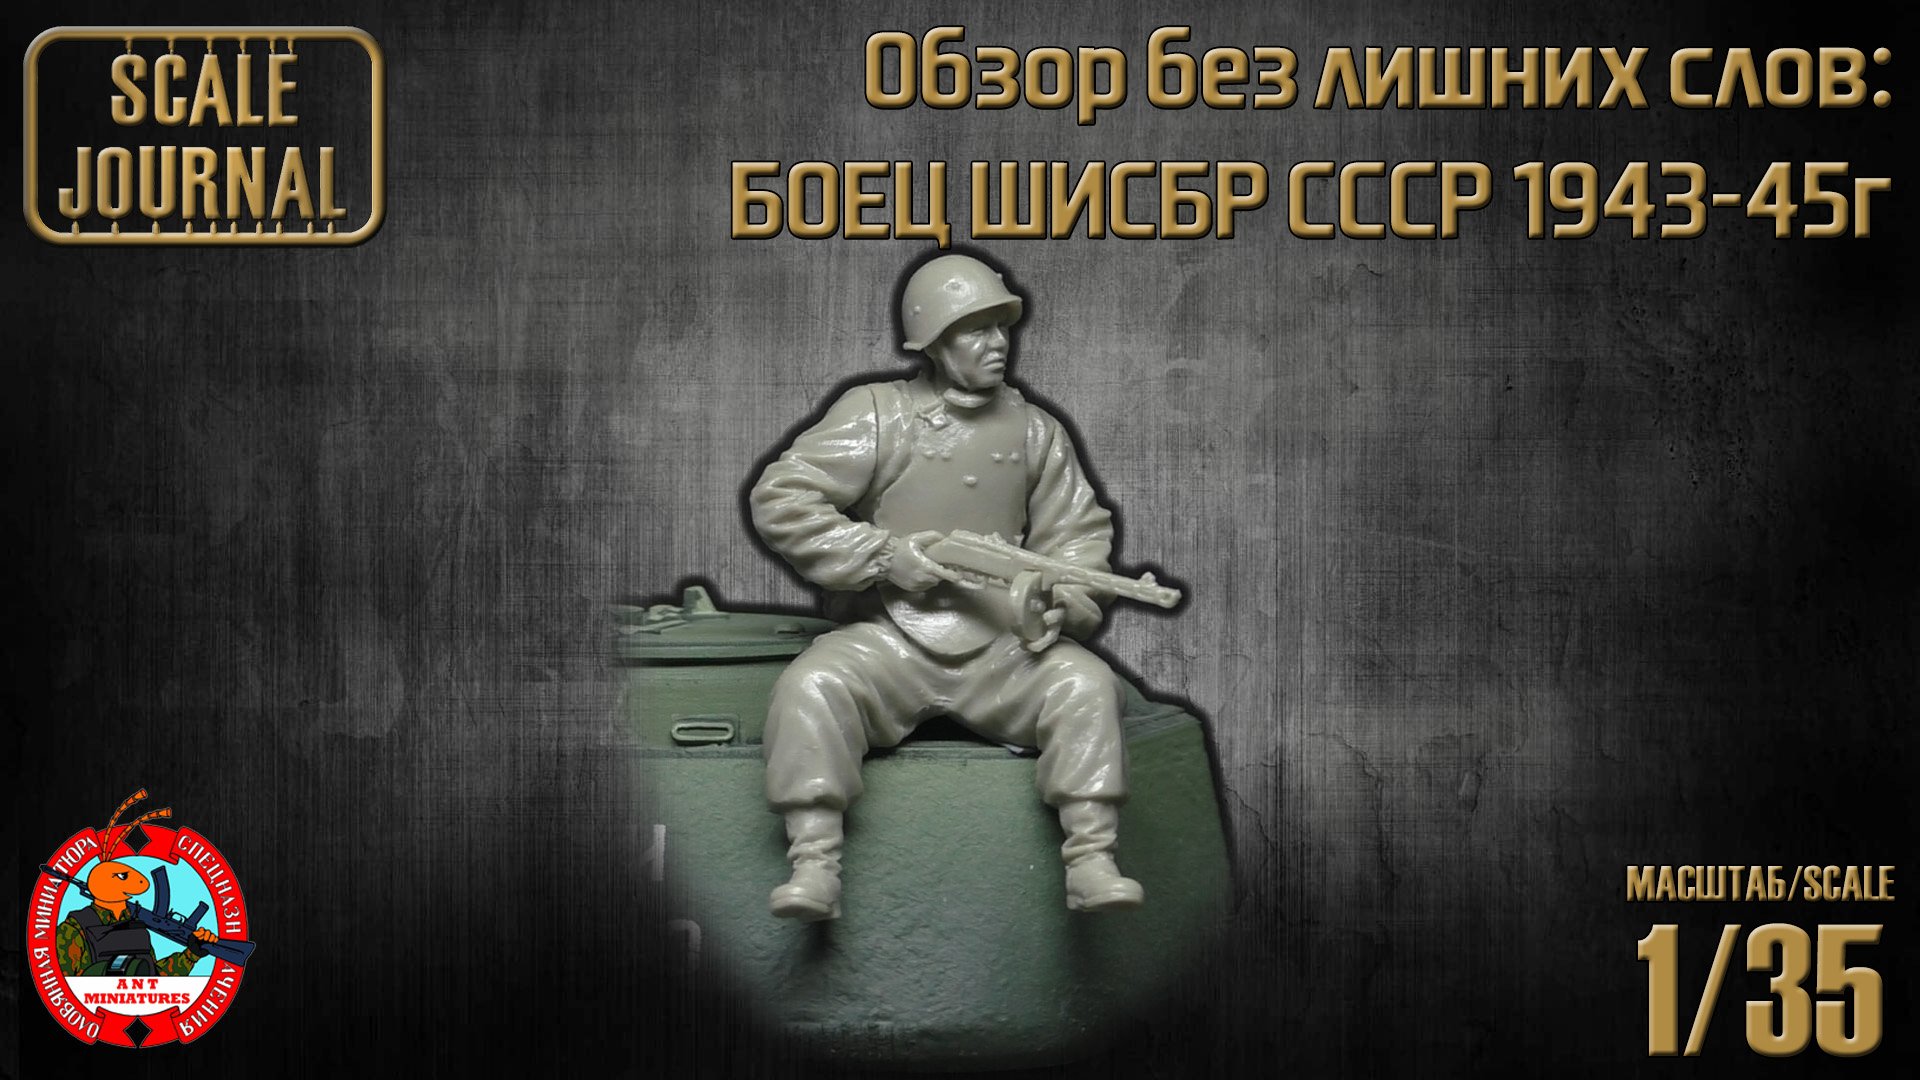 БОЕЦ ШИСБР СССР 1943-45г (ANT-MINIATURES)